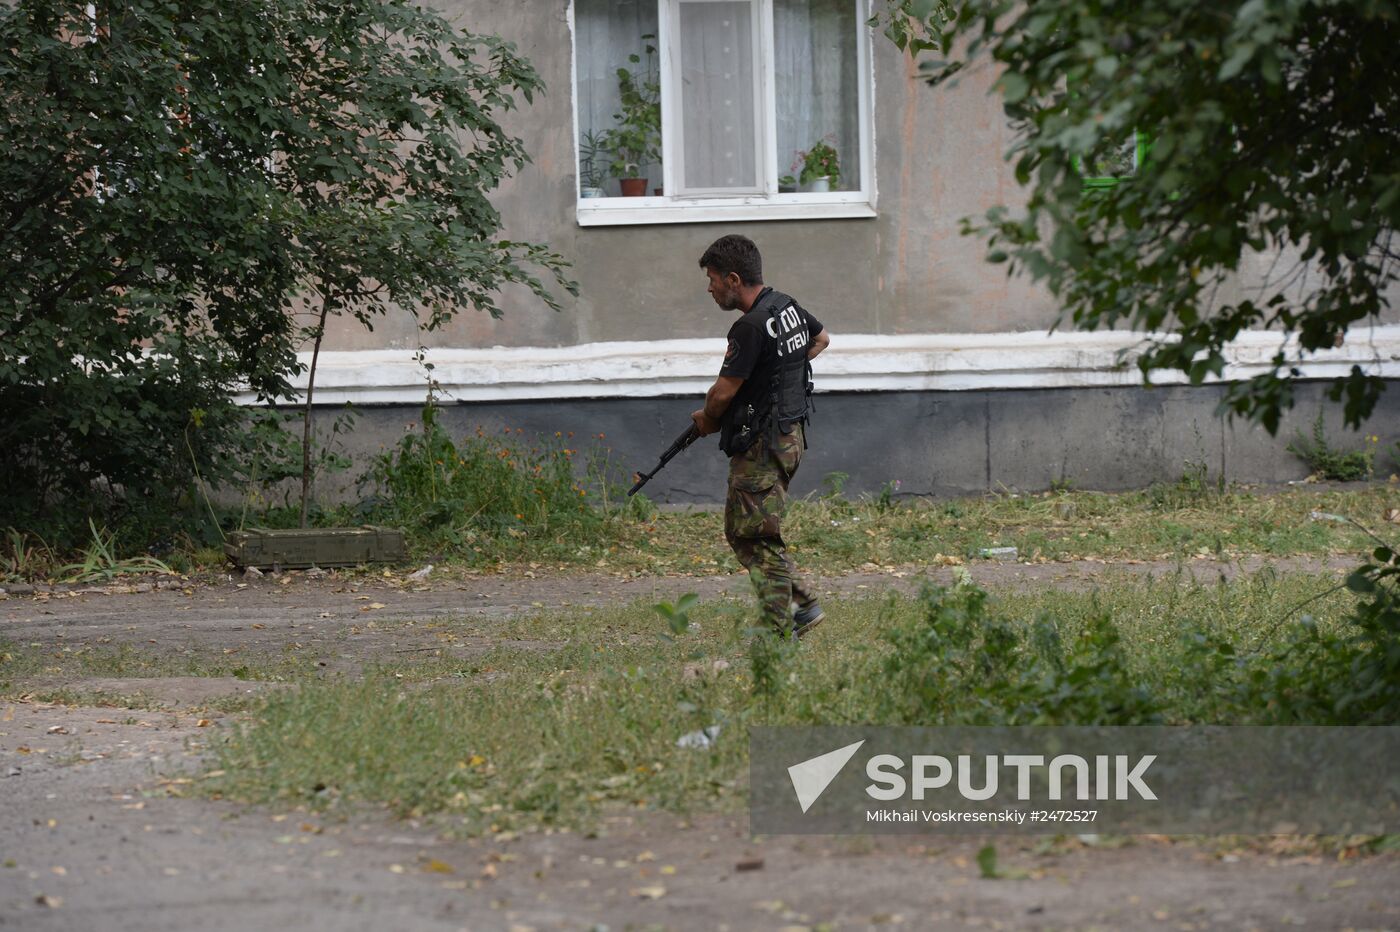 Situation in Shakhtyorsk, Donetsk Region